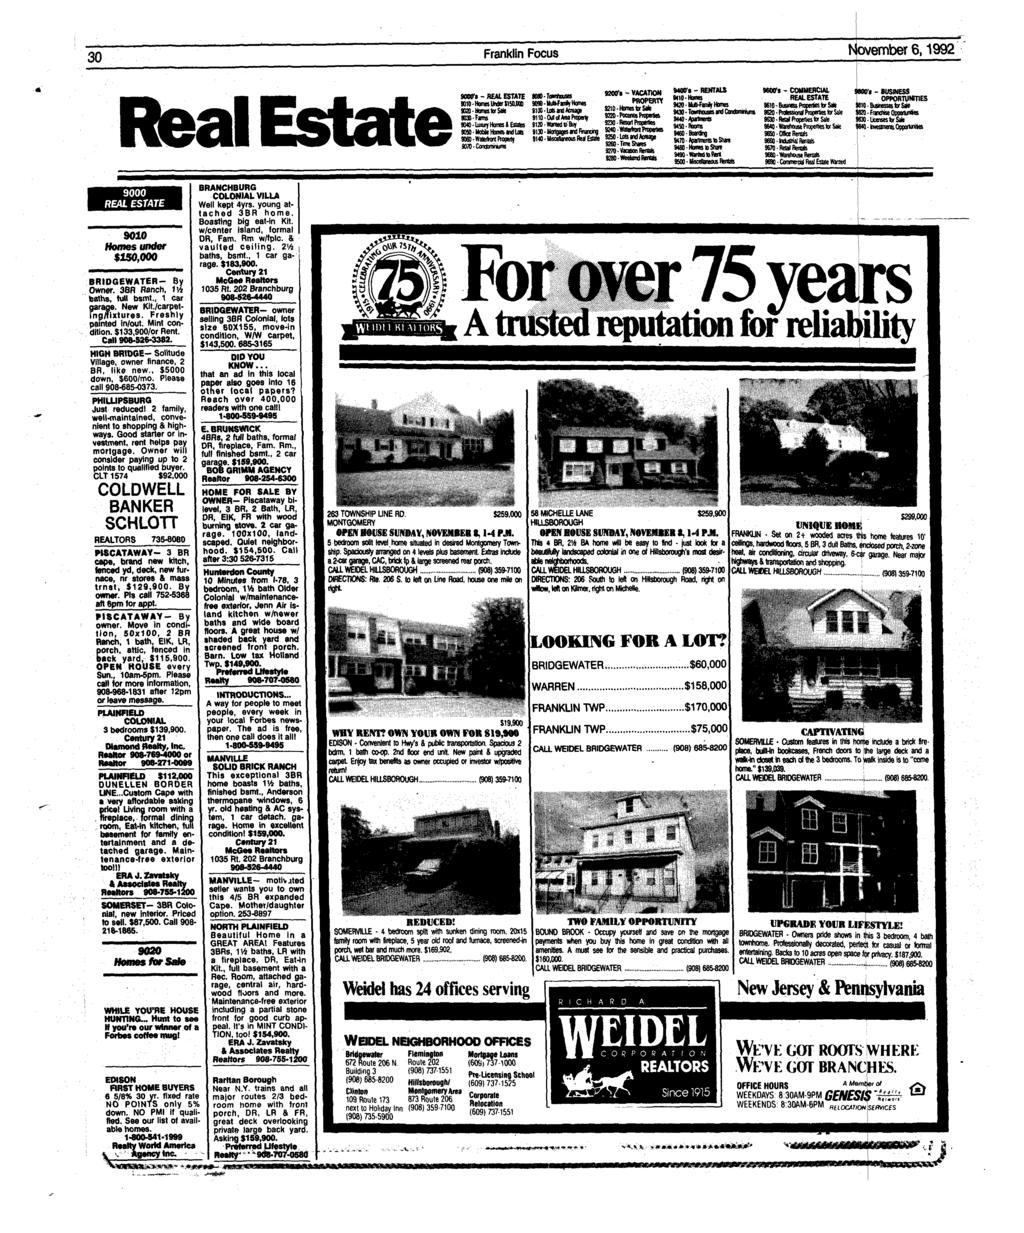 30 Franklin Focus November 6,1992 Real EstateSOOtta - REAL ESTATE MtO-Horas Under J15O.